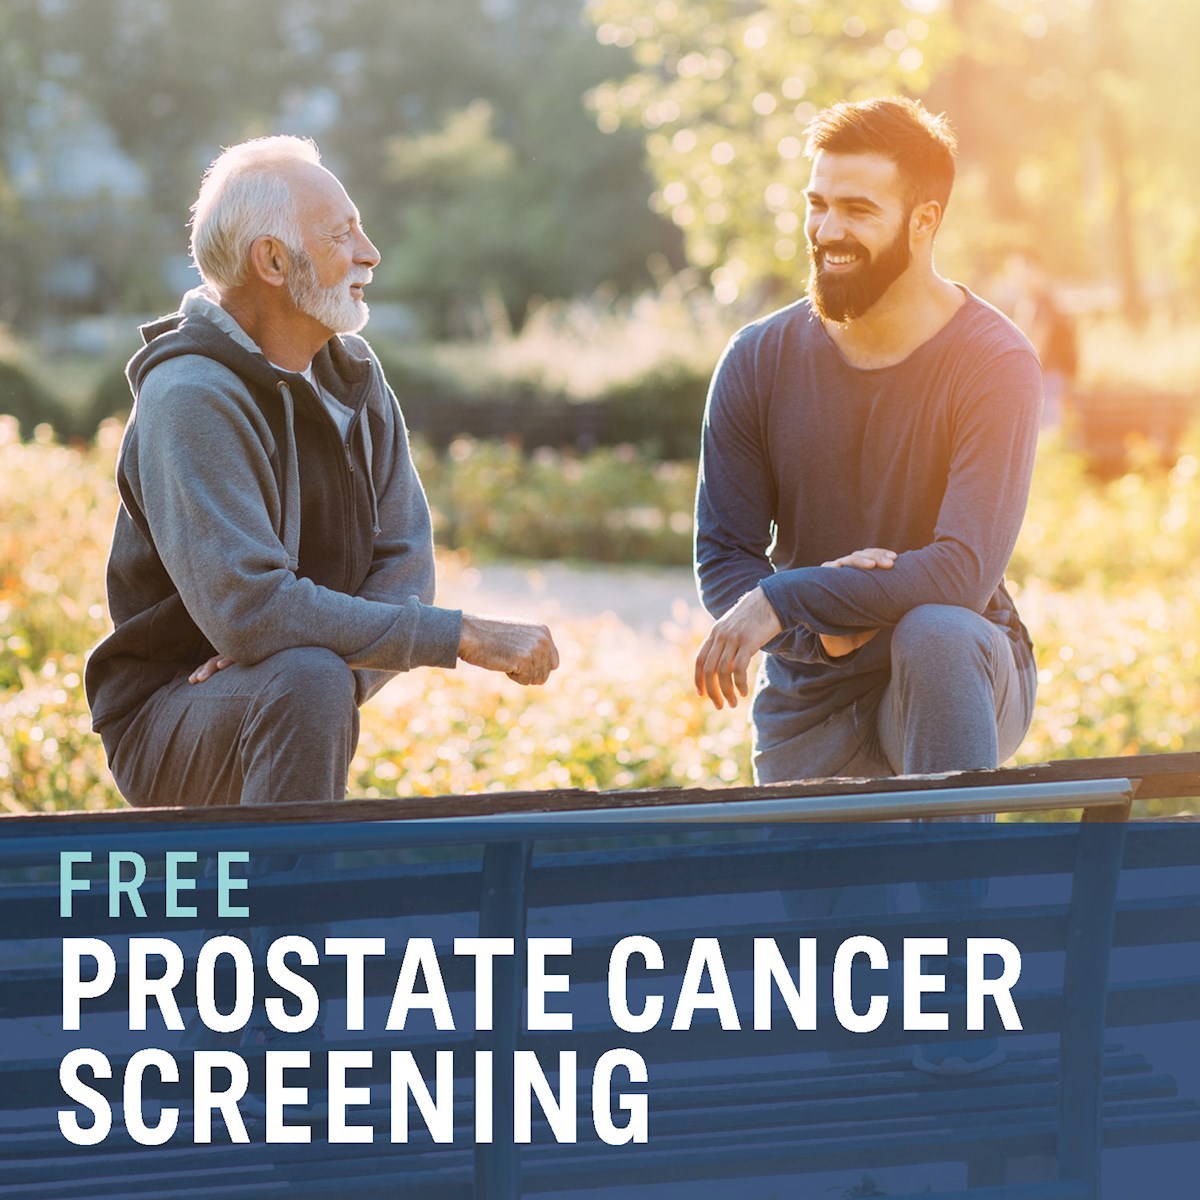 Free Prostate Cancer Screening September, Sept. 24